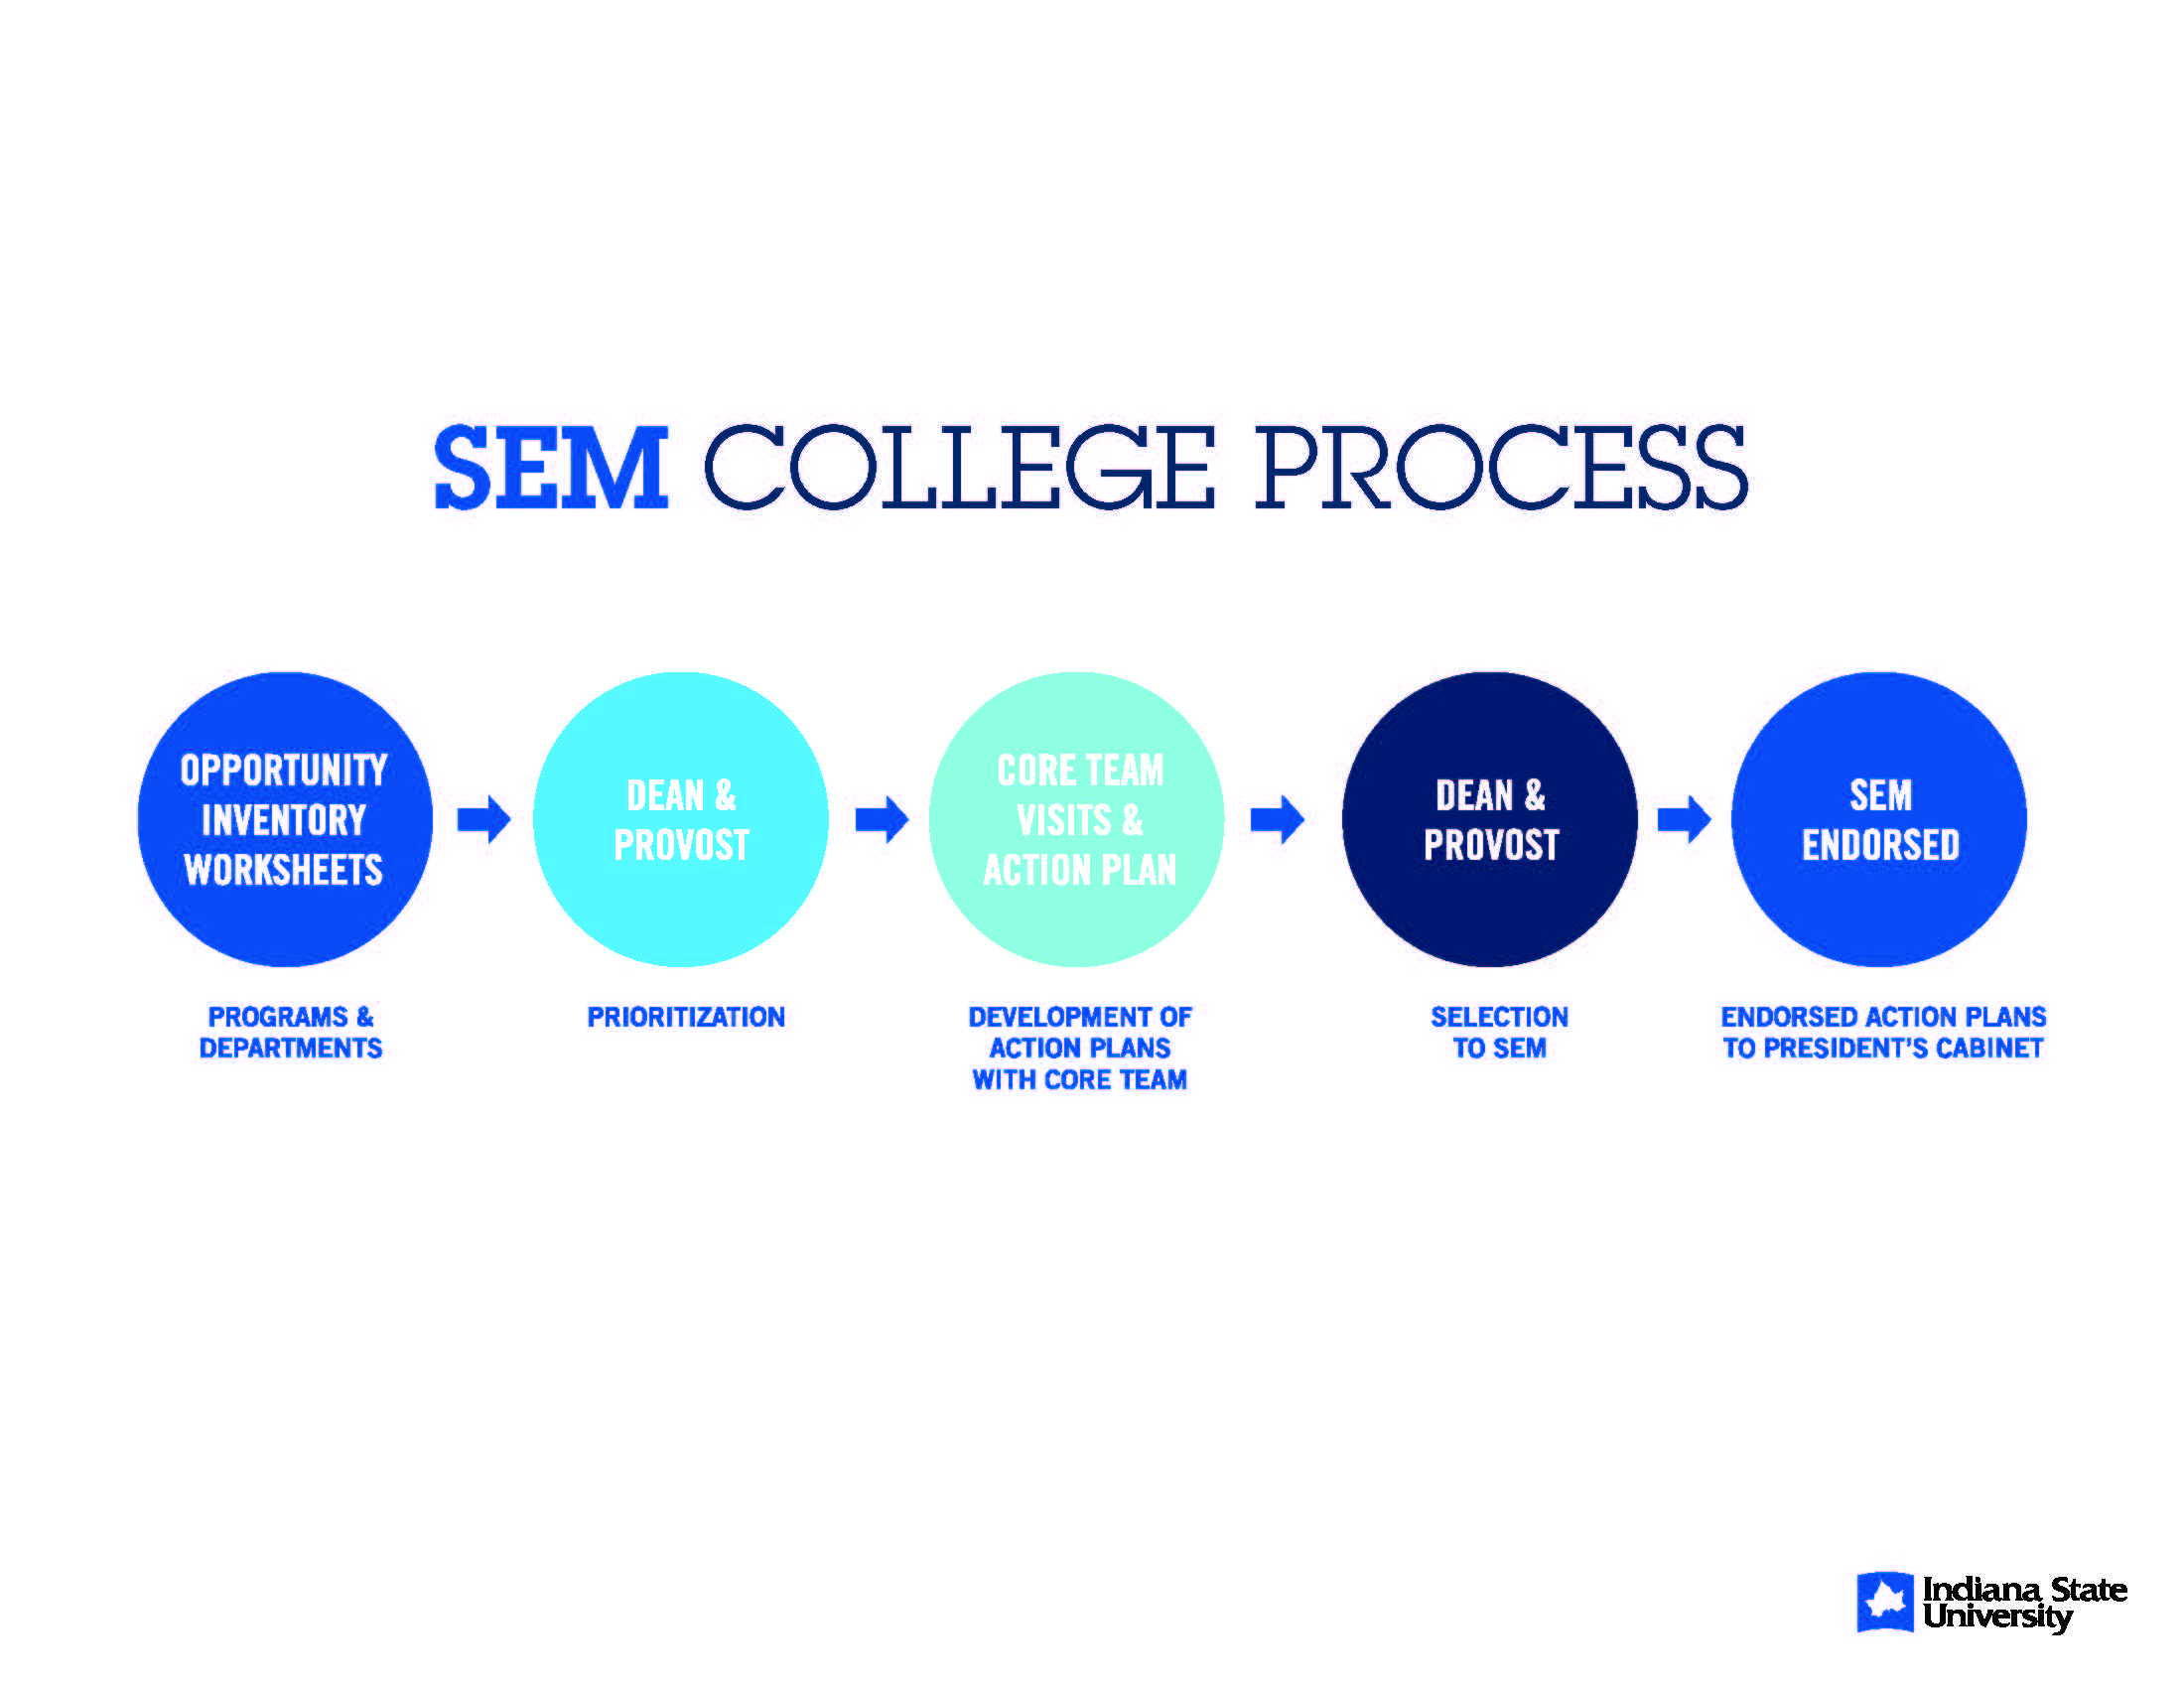 sem-college-process-201905.jpg